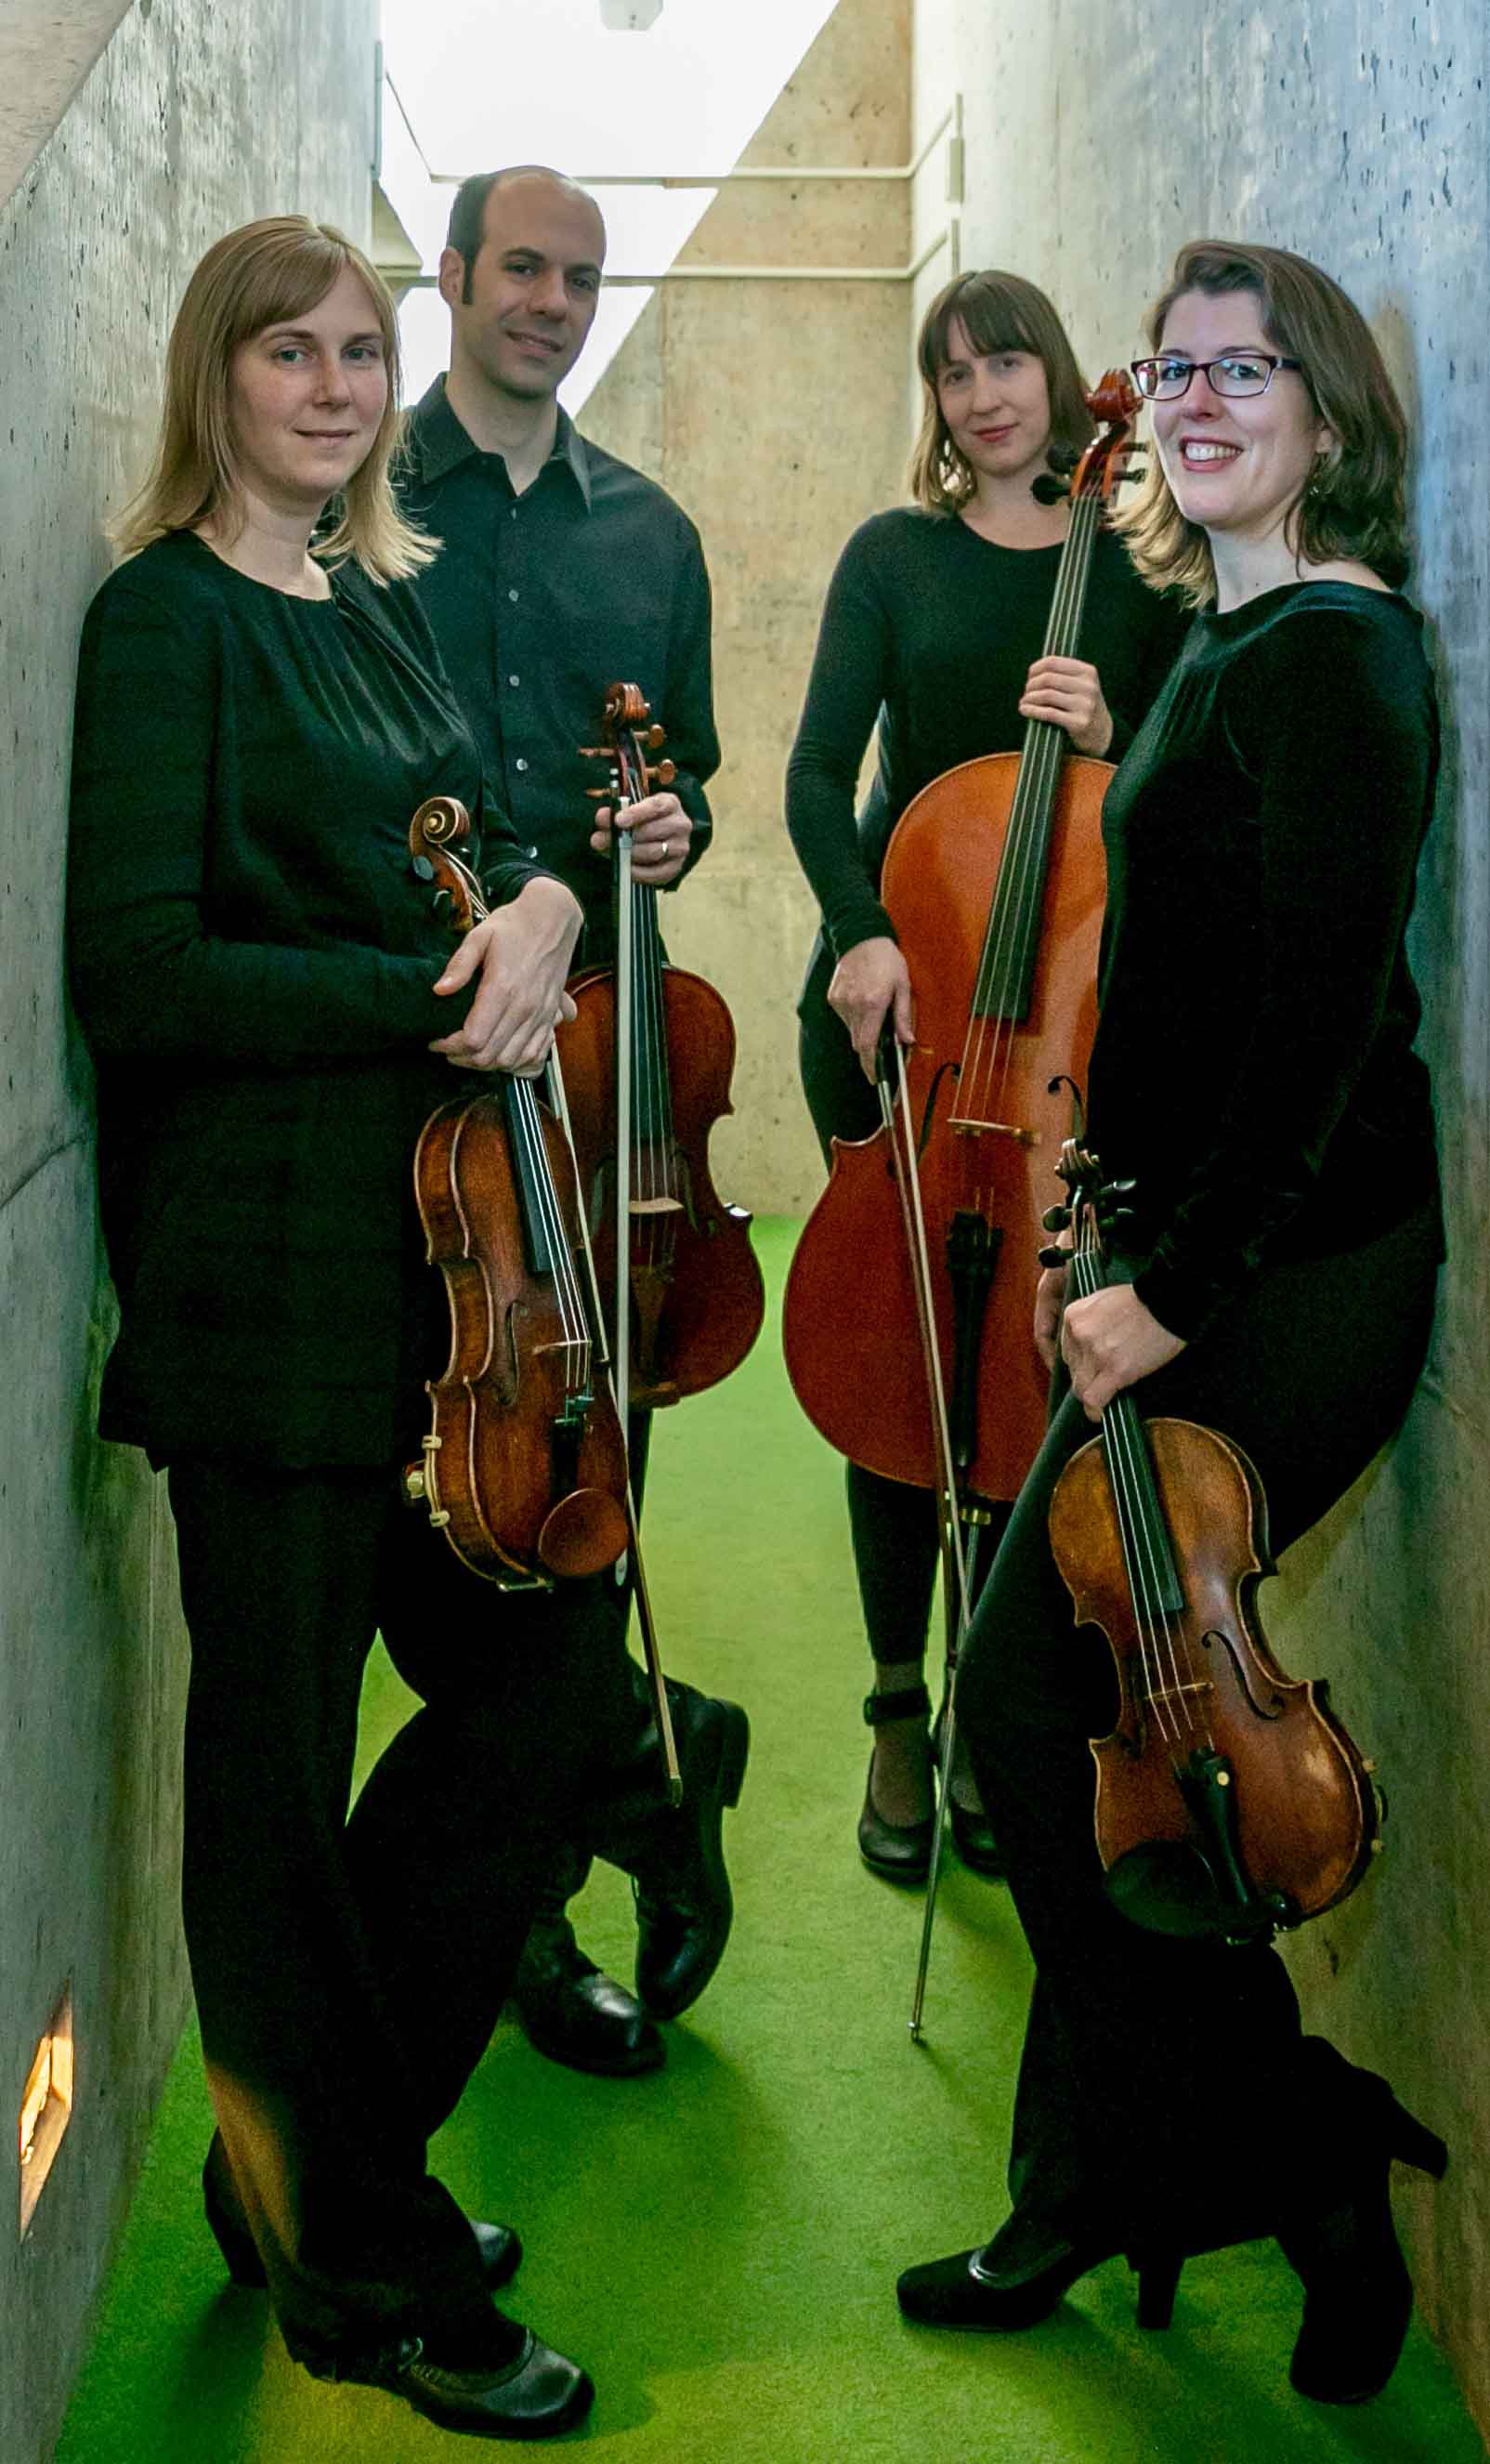 The West End String Quartet